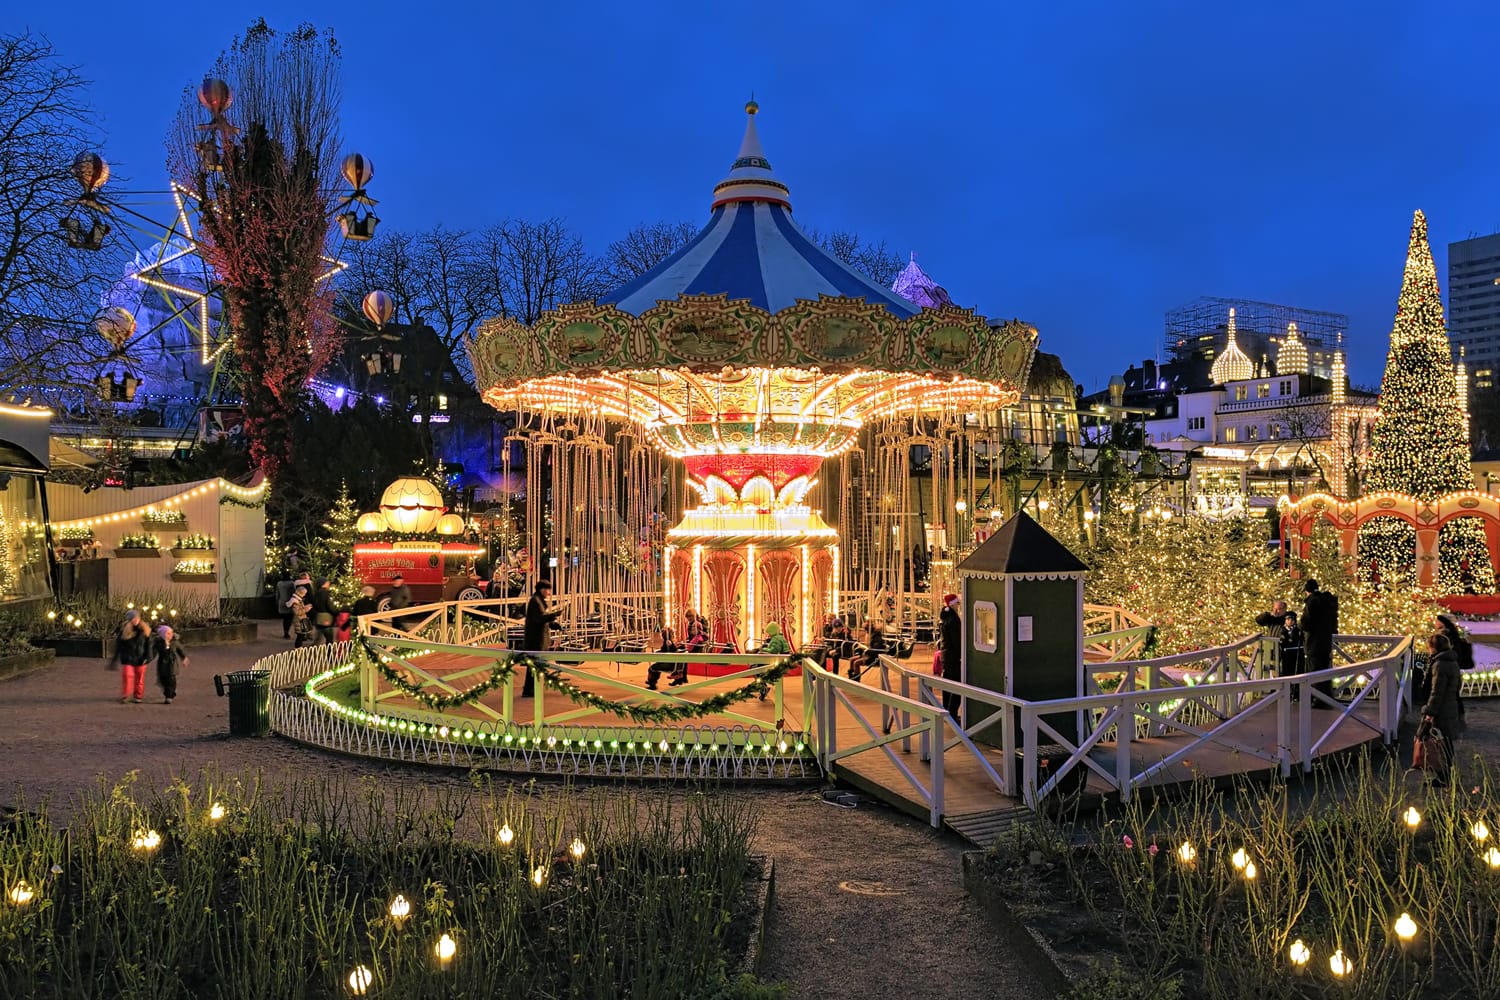 The carousel and christmas illumination in Tivoli Gardens, a famous amusement park and pleasure garden in Copenhagen, Denmark